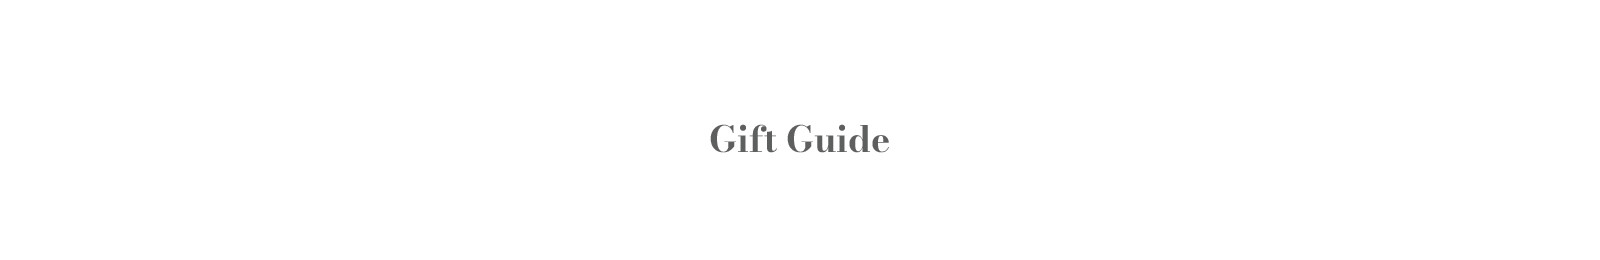 Website_CTABanner_1600x400_6.17.22_Gift Guide Desktop